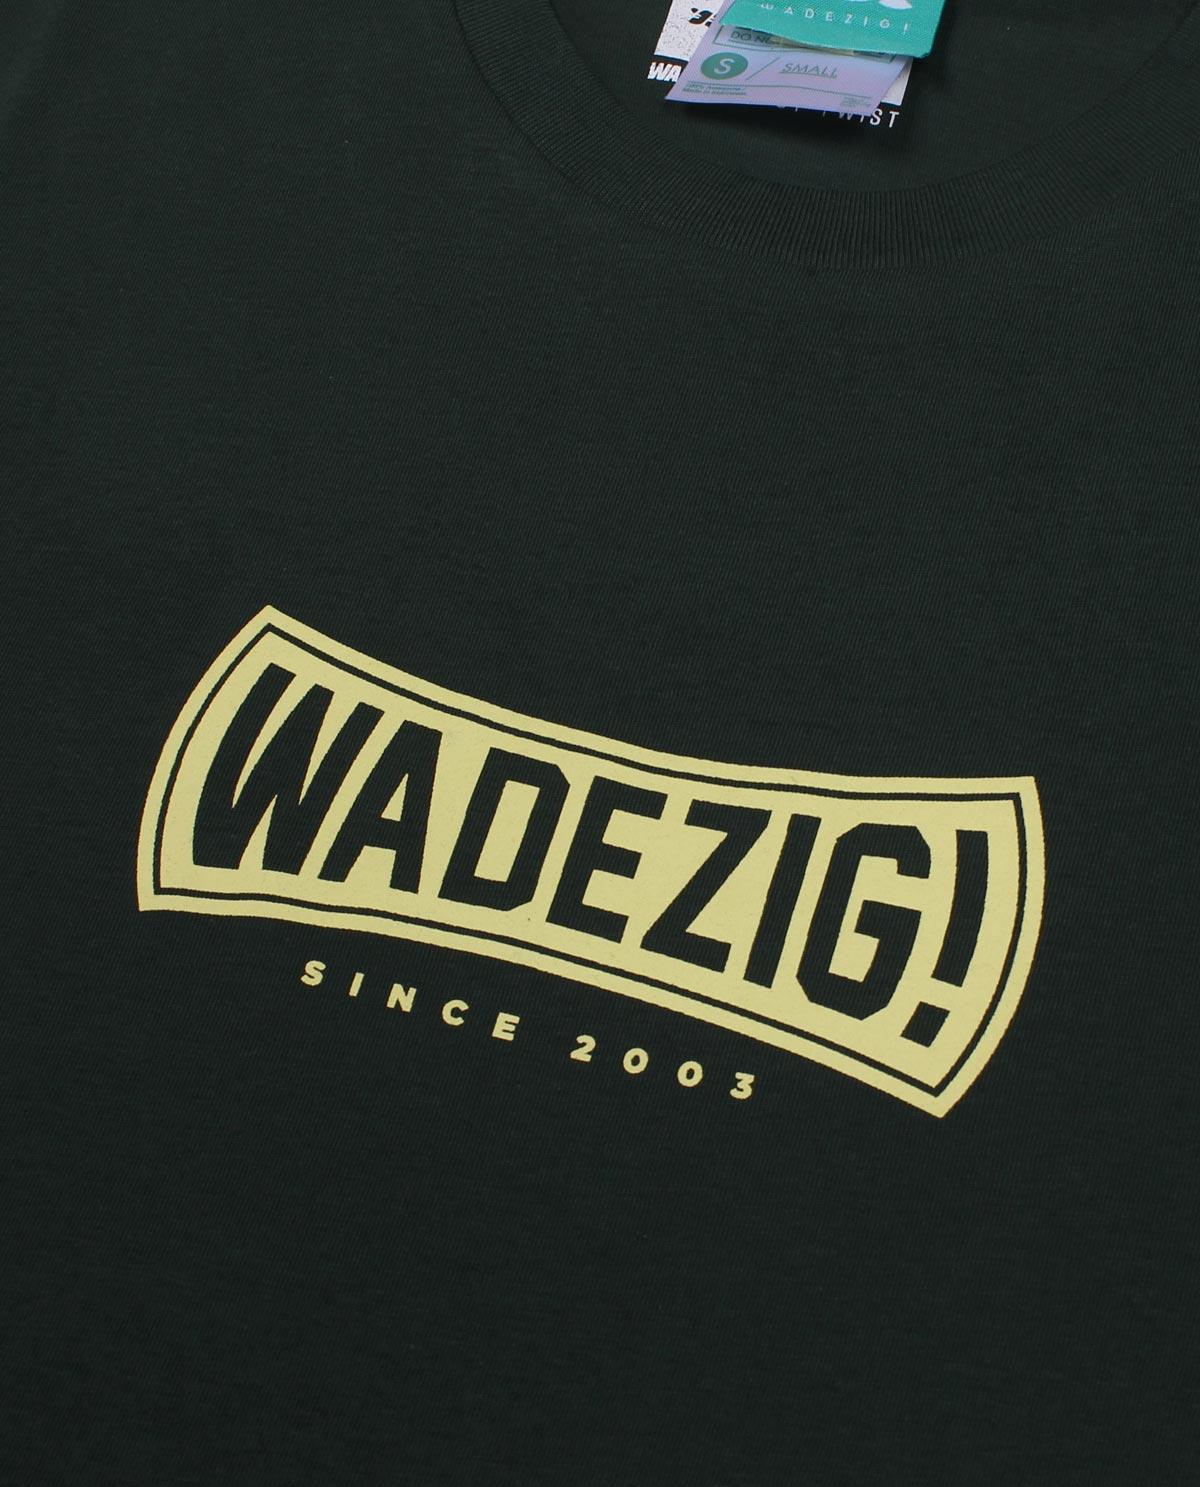 Wadezig! T-Shirt - Warp Green